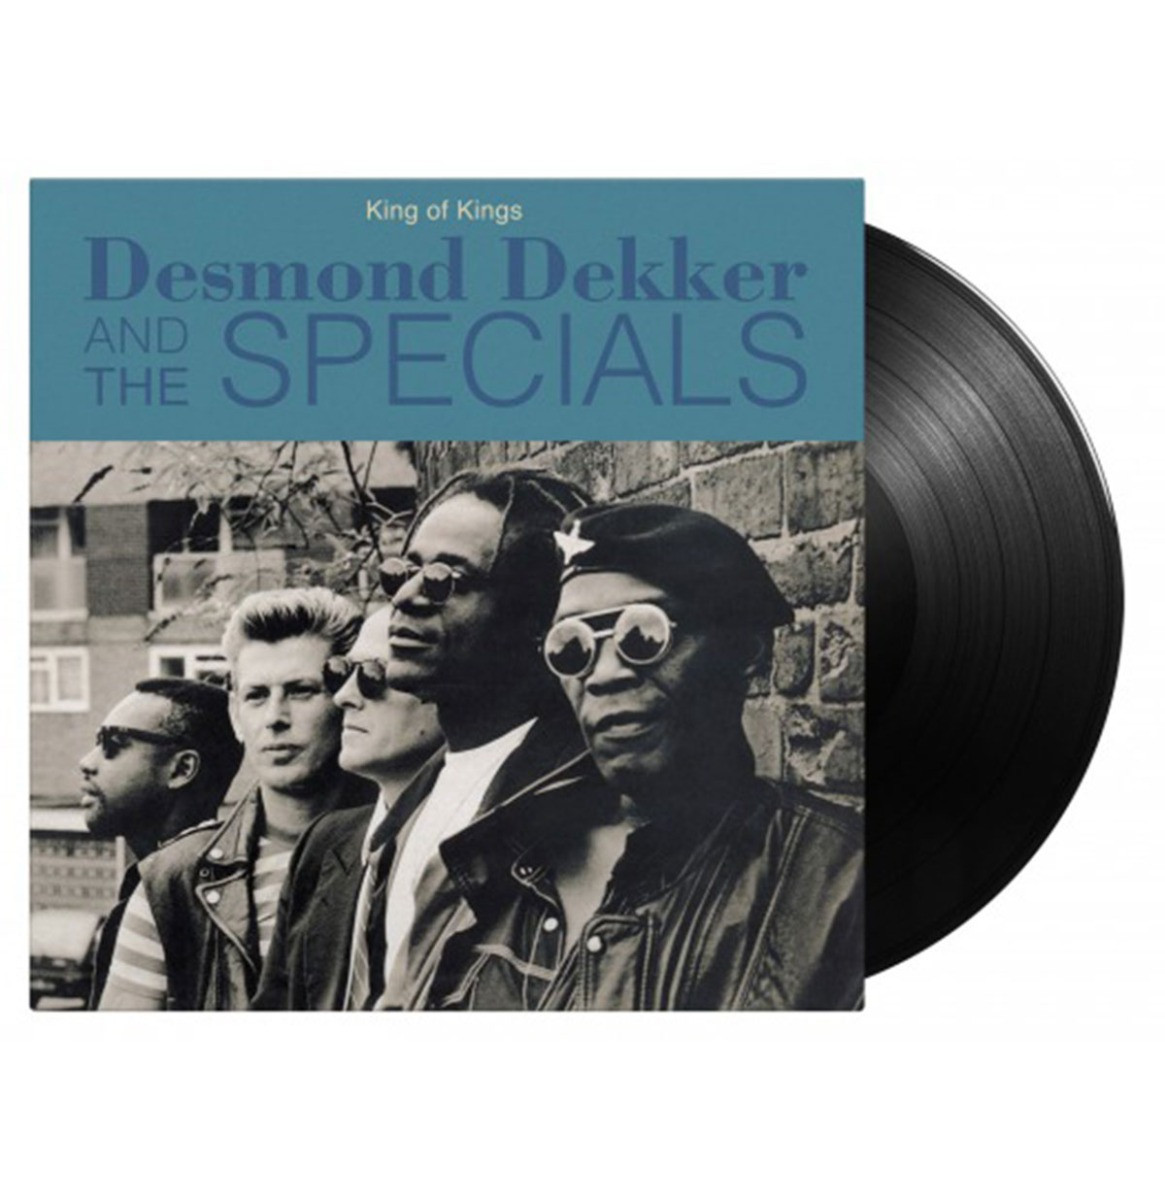 Desmond Dekker And The Specials - King Of Kings LP